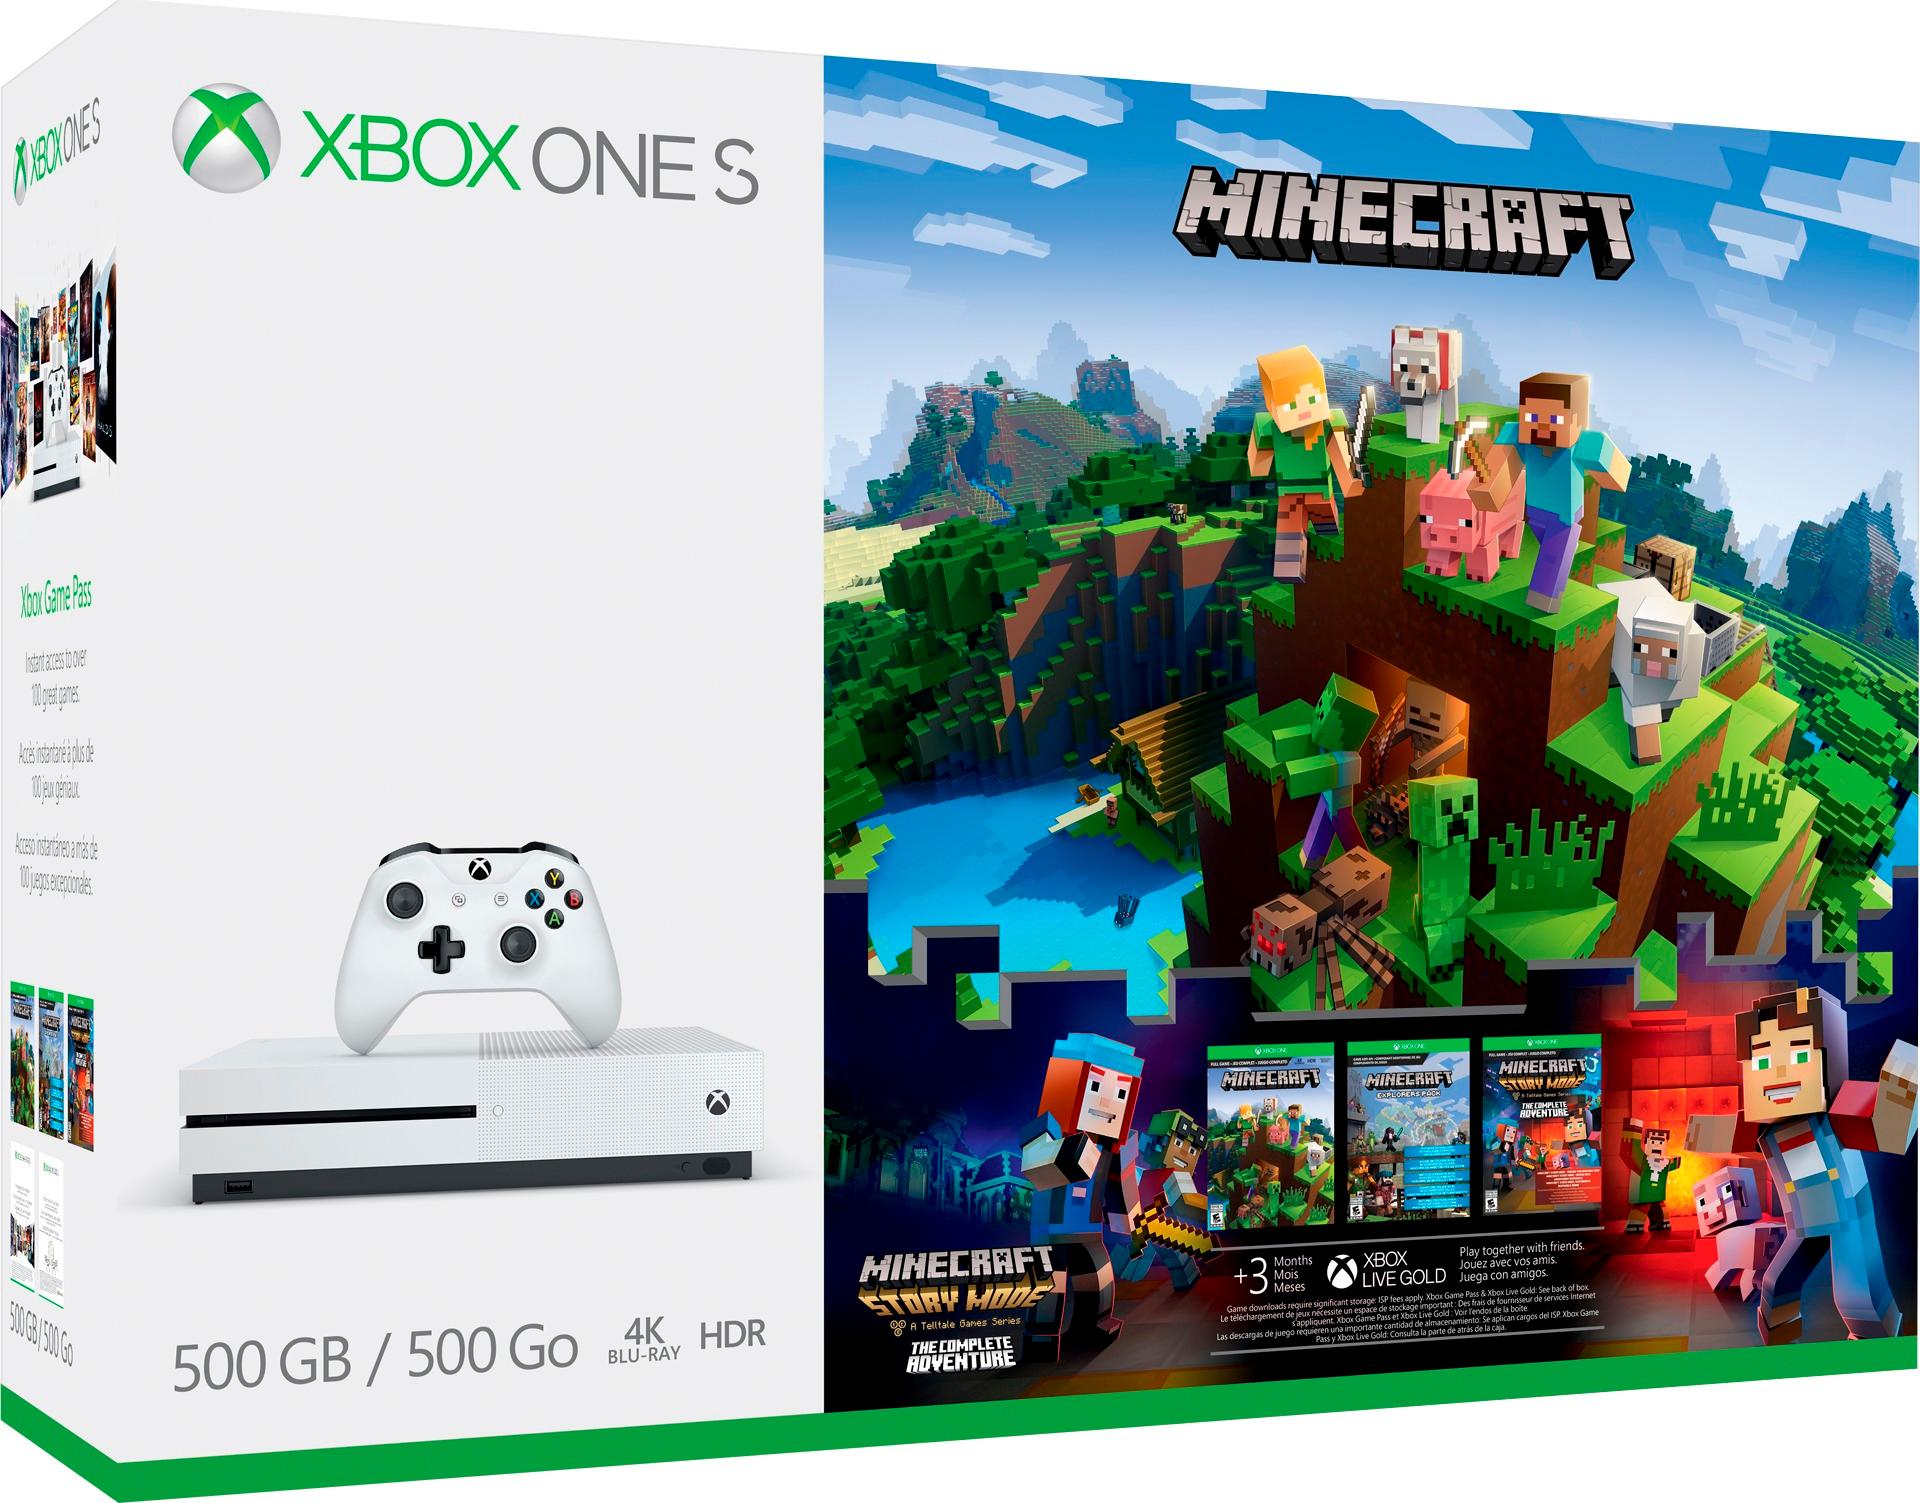 Minecraft Xbox 360 Edition – Pendrive 16GB - 95xGames